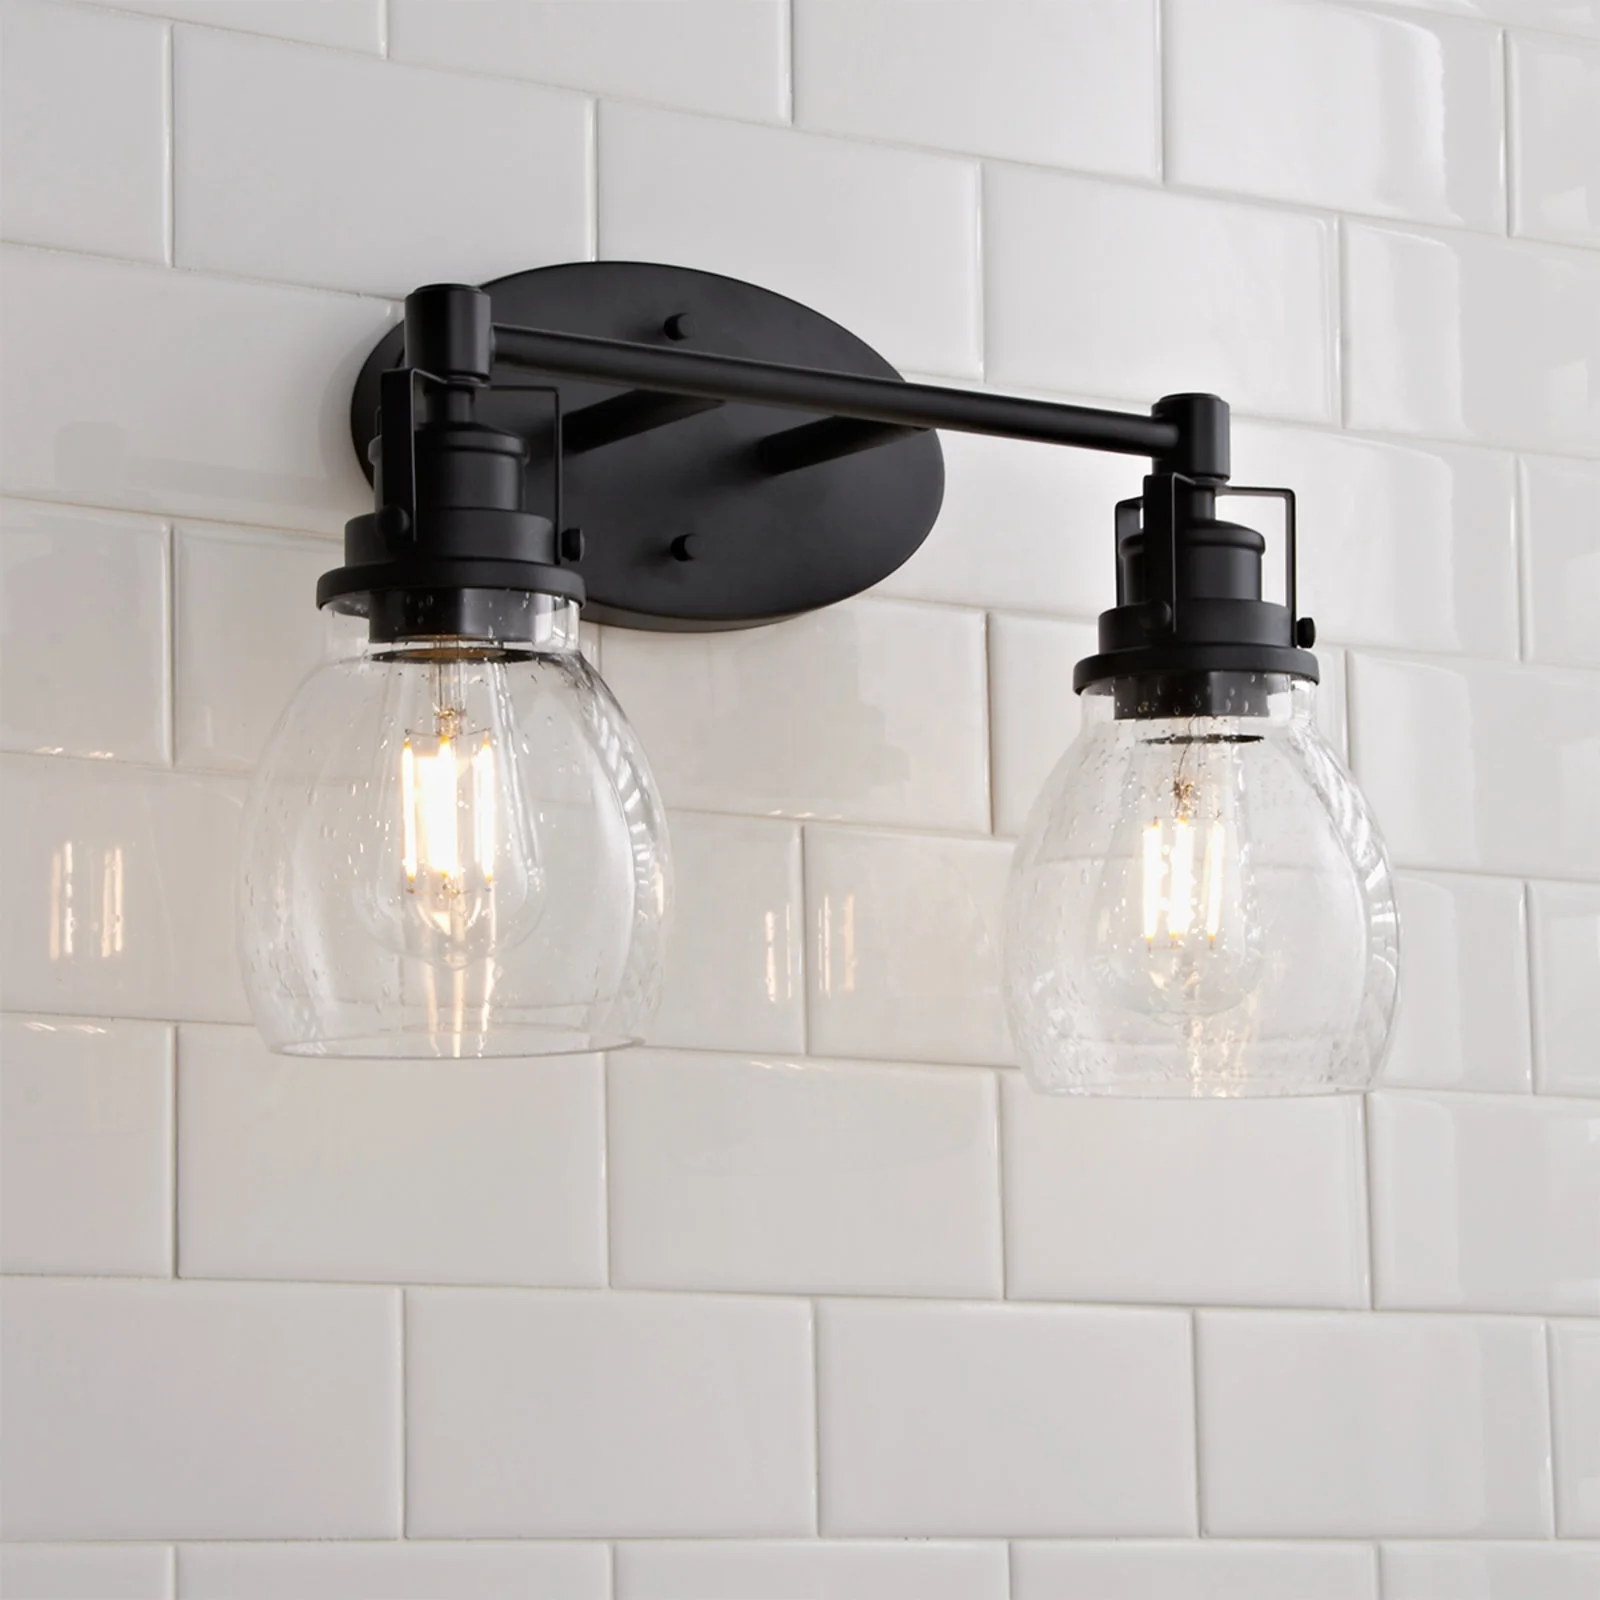 black 2 lights wall lamp seeded glass shade farmhouse wall sconce fixtures indoor bathroom wall lightings